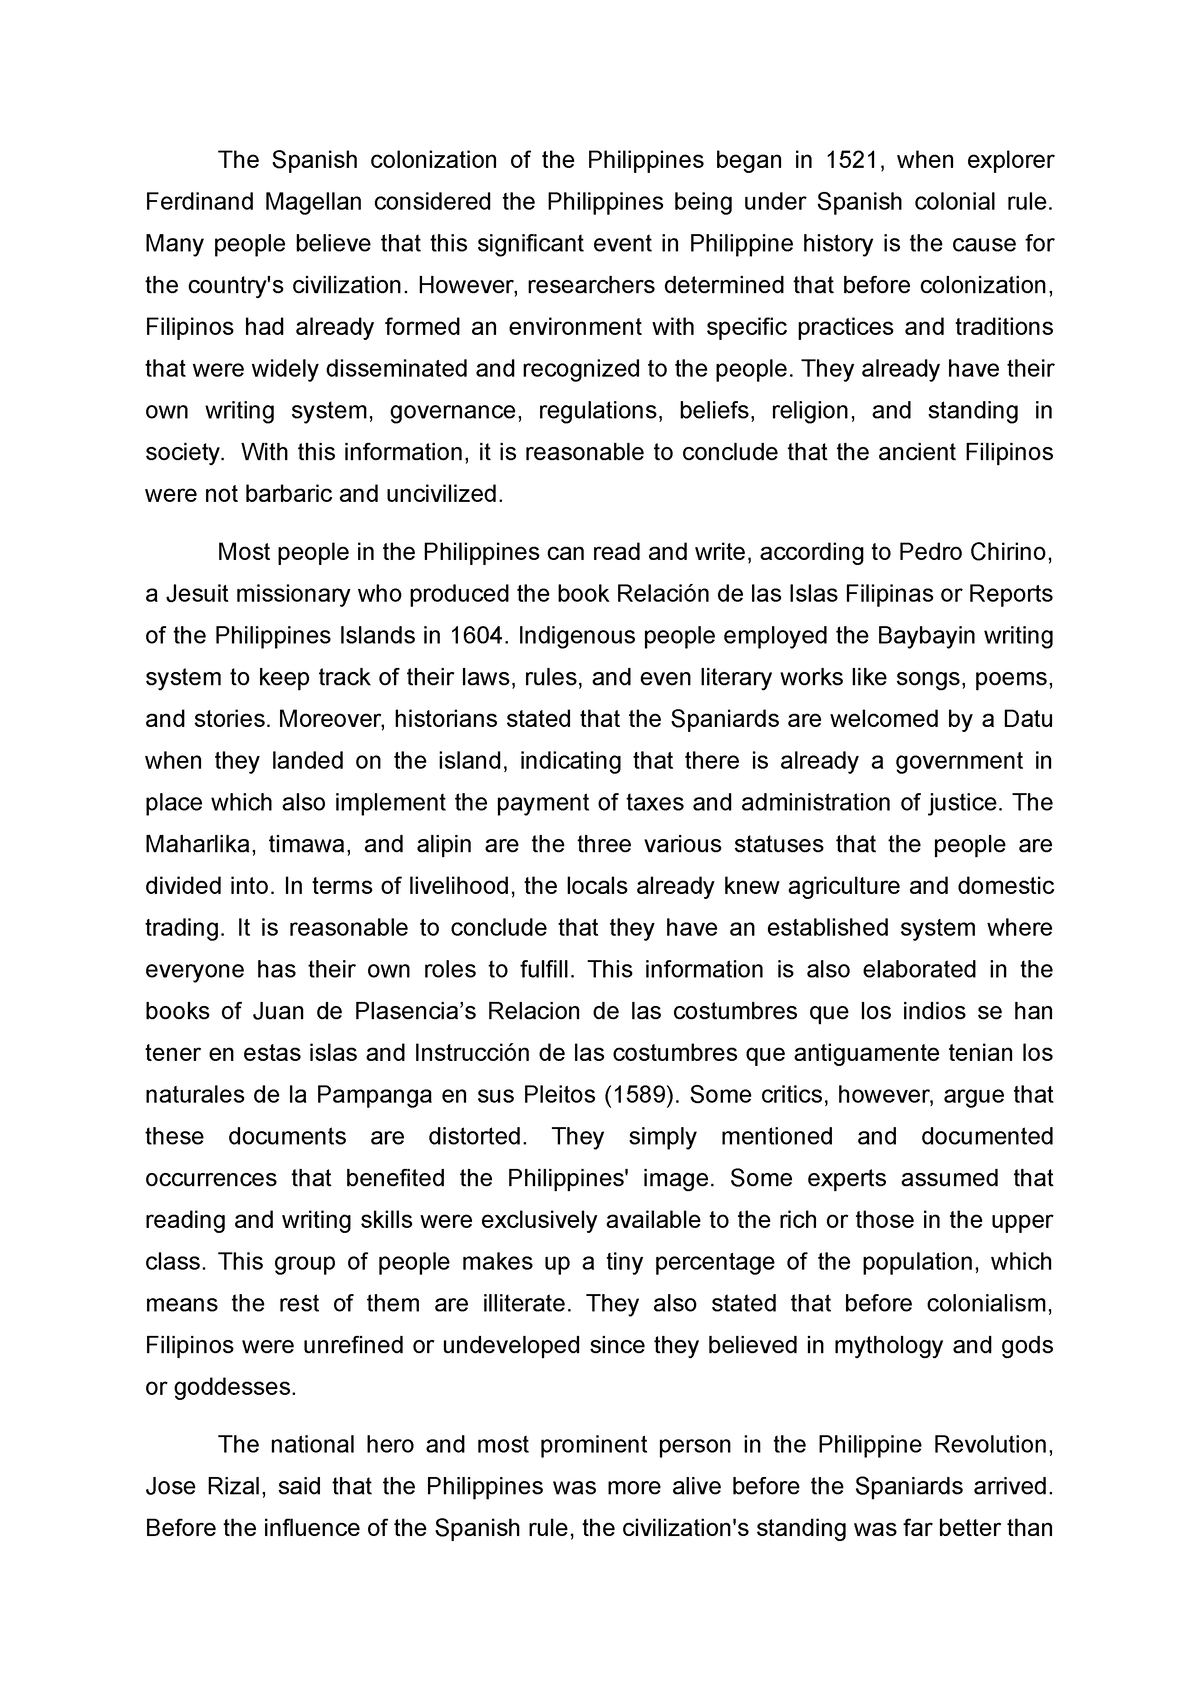 argumentative essay about west philippine sea brainly